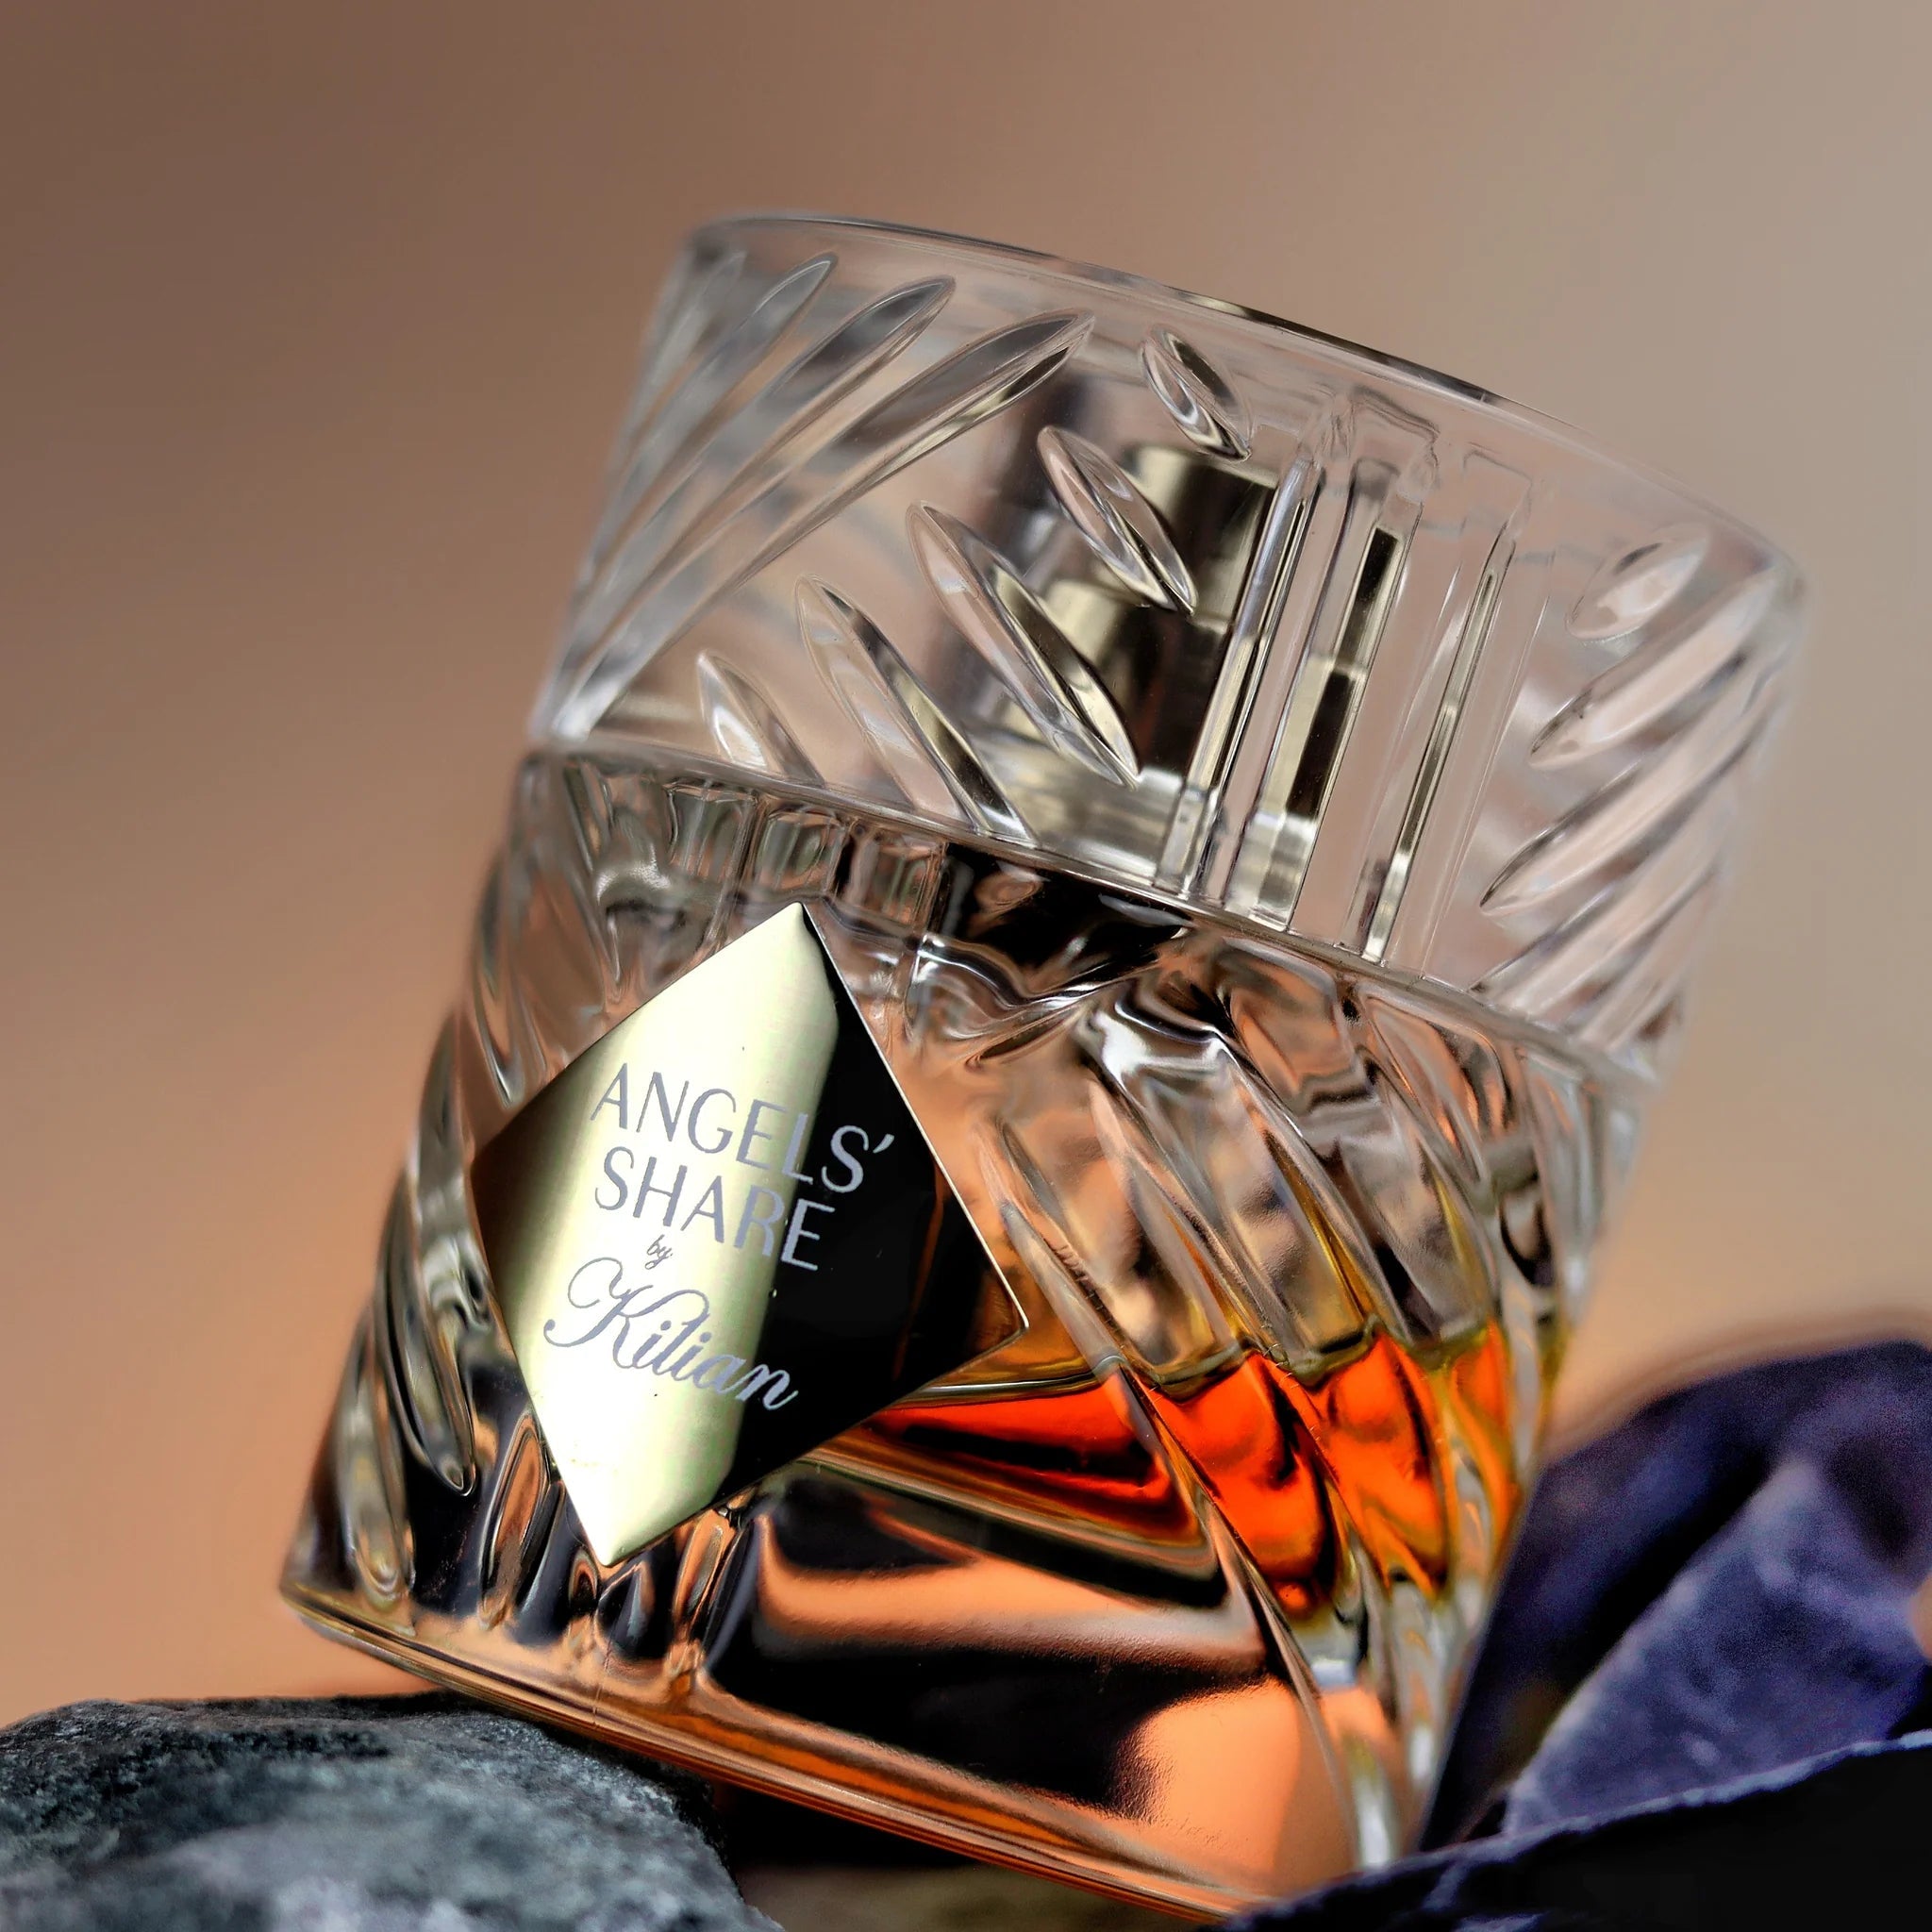 Kilian Angels' Share EDP | My Perfume Shop Australia